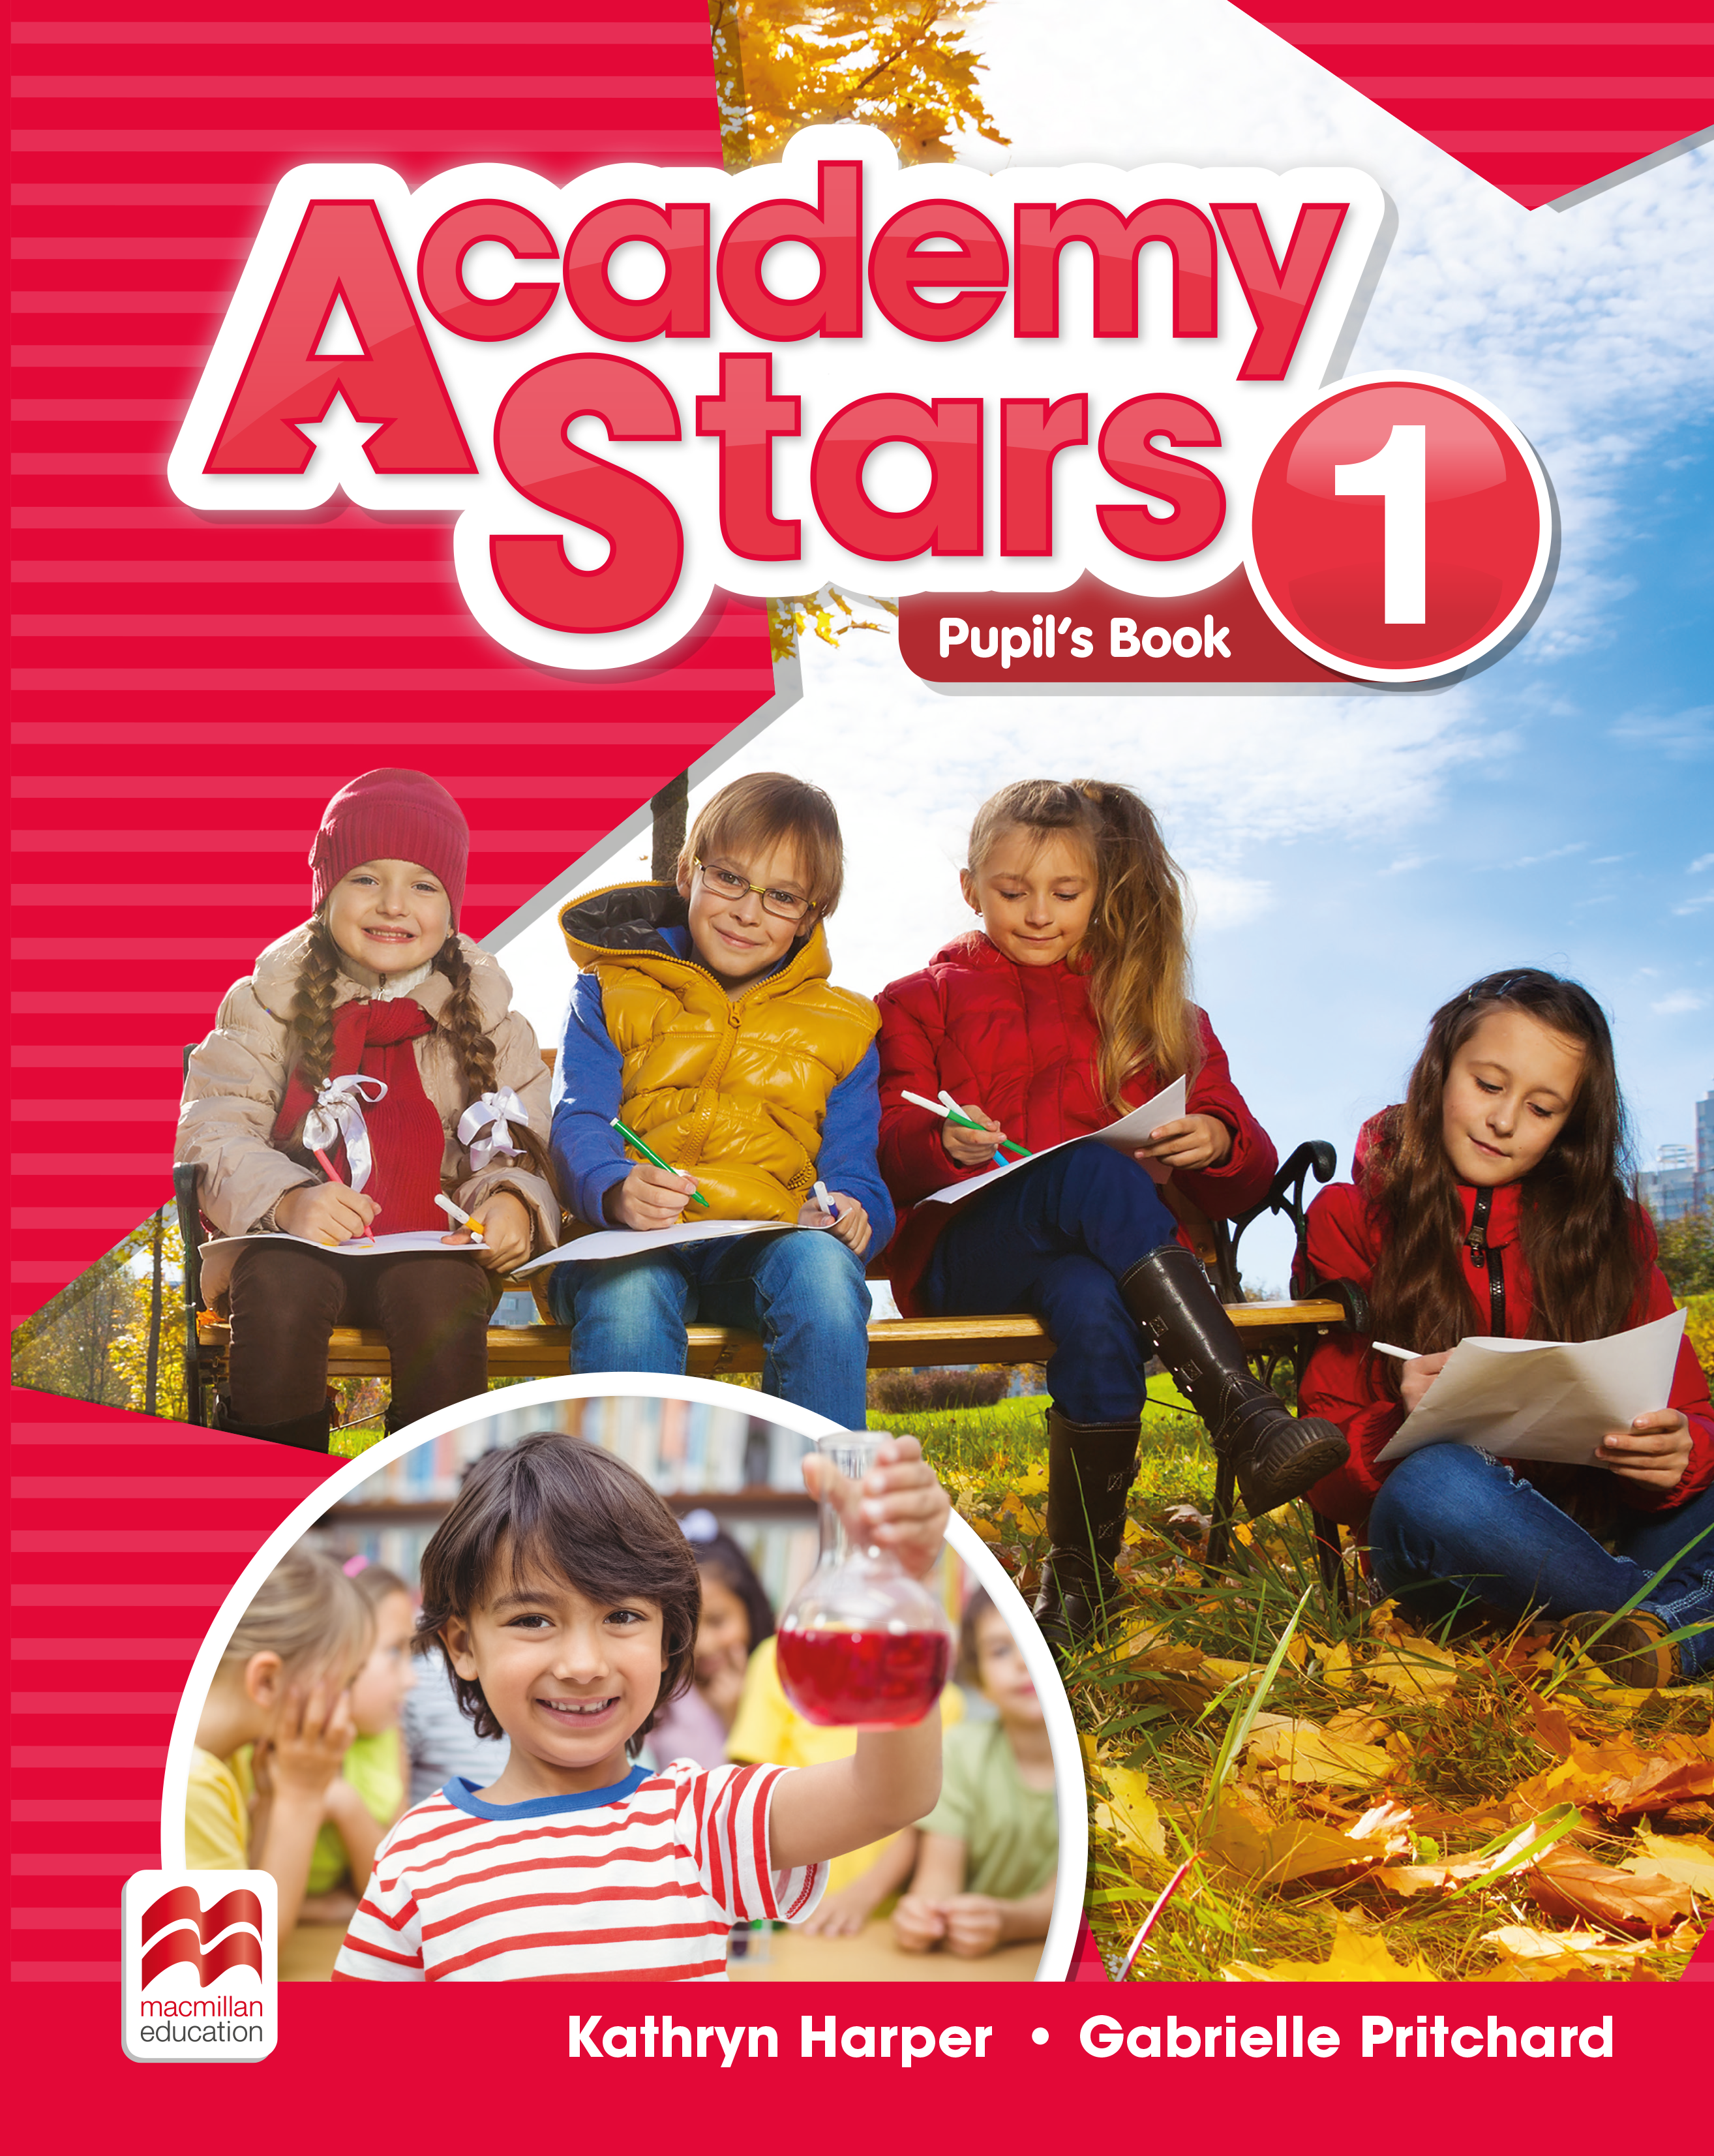 academy stars 1 pdf download